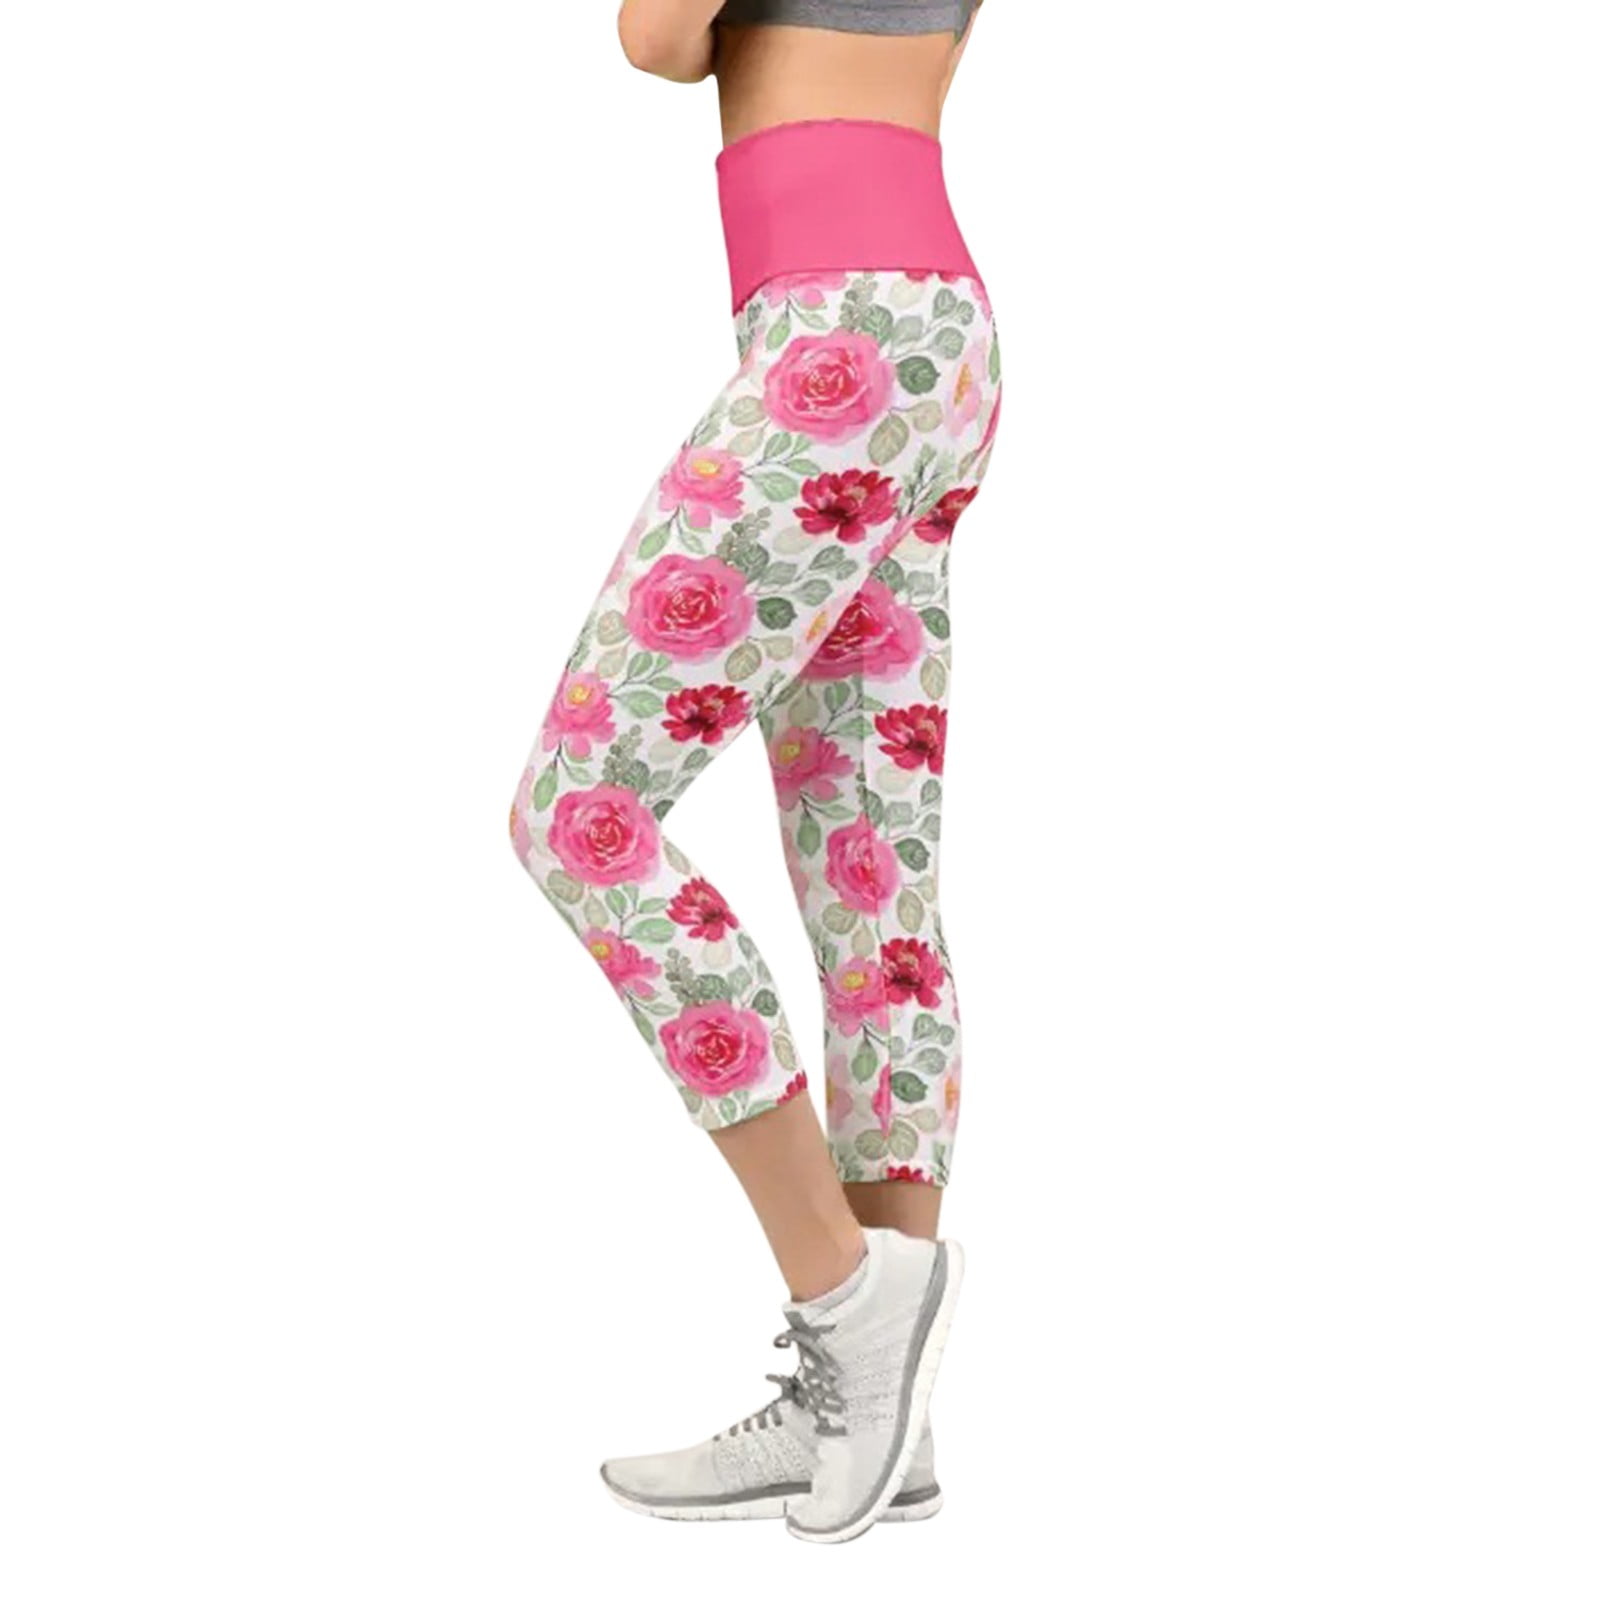 Gubotare Yoga Pants For Women Womens Leggings-No See-Through High Waisted  Tummy Control Yoga Pants Workout Running Legging,Pink L 